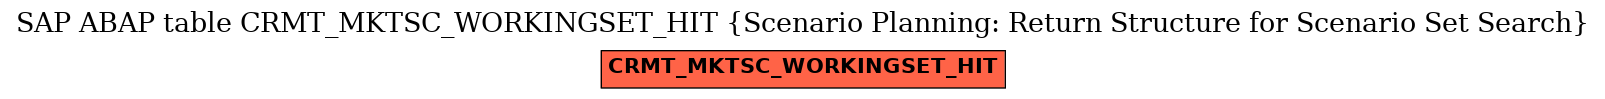 E-R Diagram for table CRMT_MKTSC_WORKINGSET_HIT (Scenario Planning: Return Structure for Scenario Set Search)